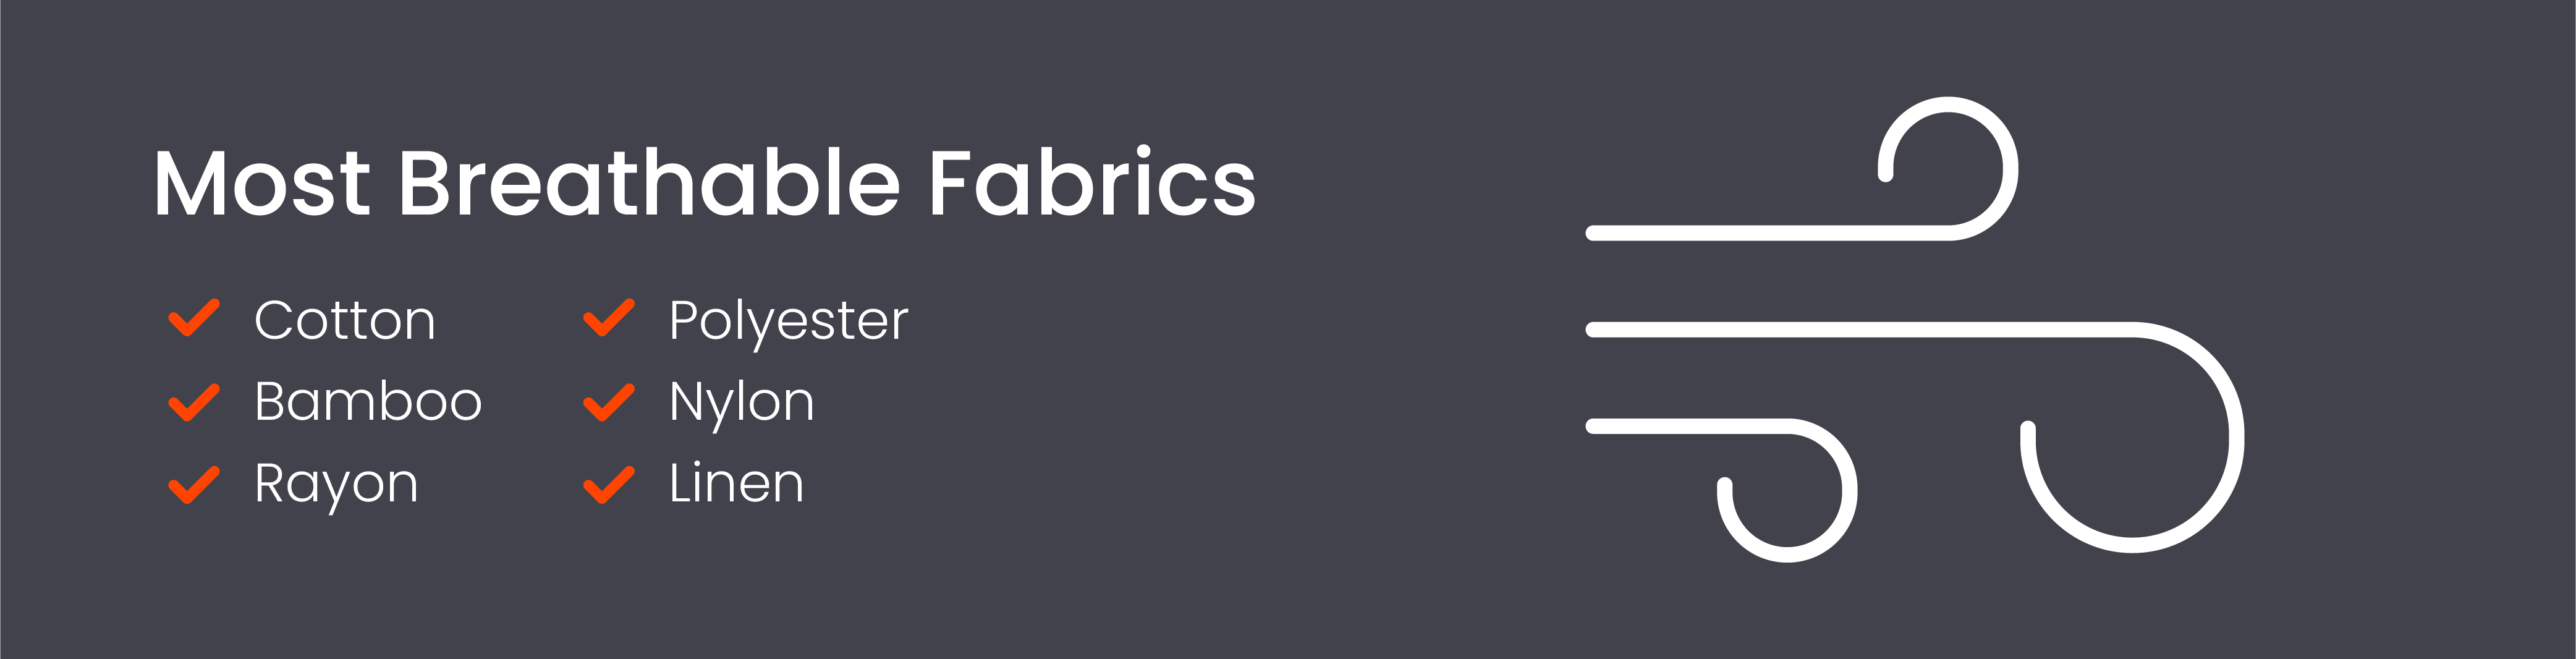 Most breathable fabrics